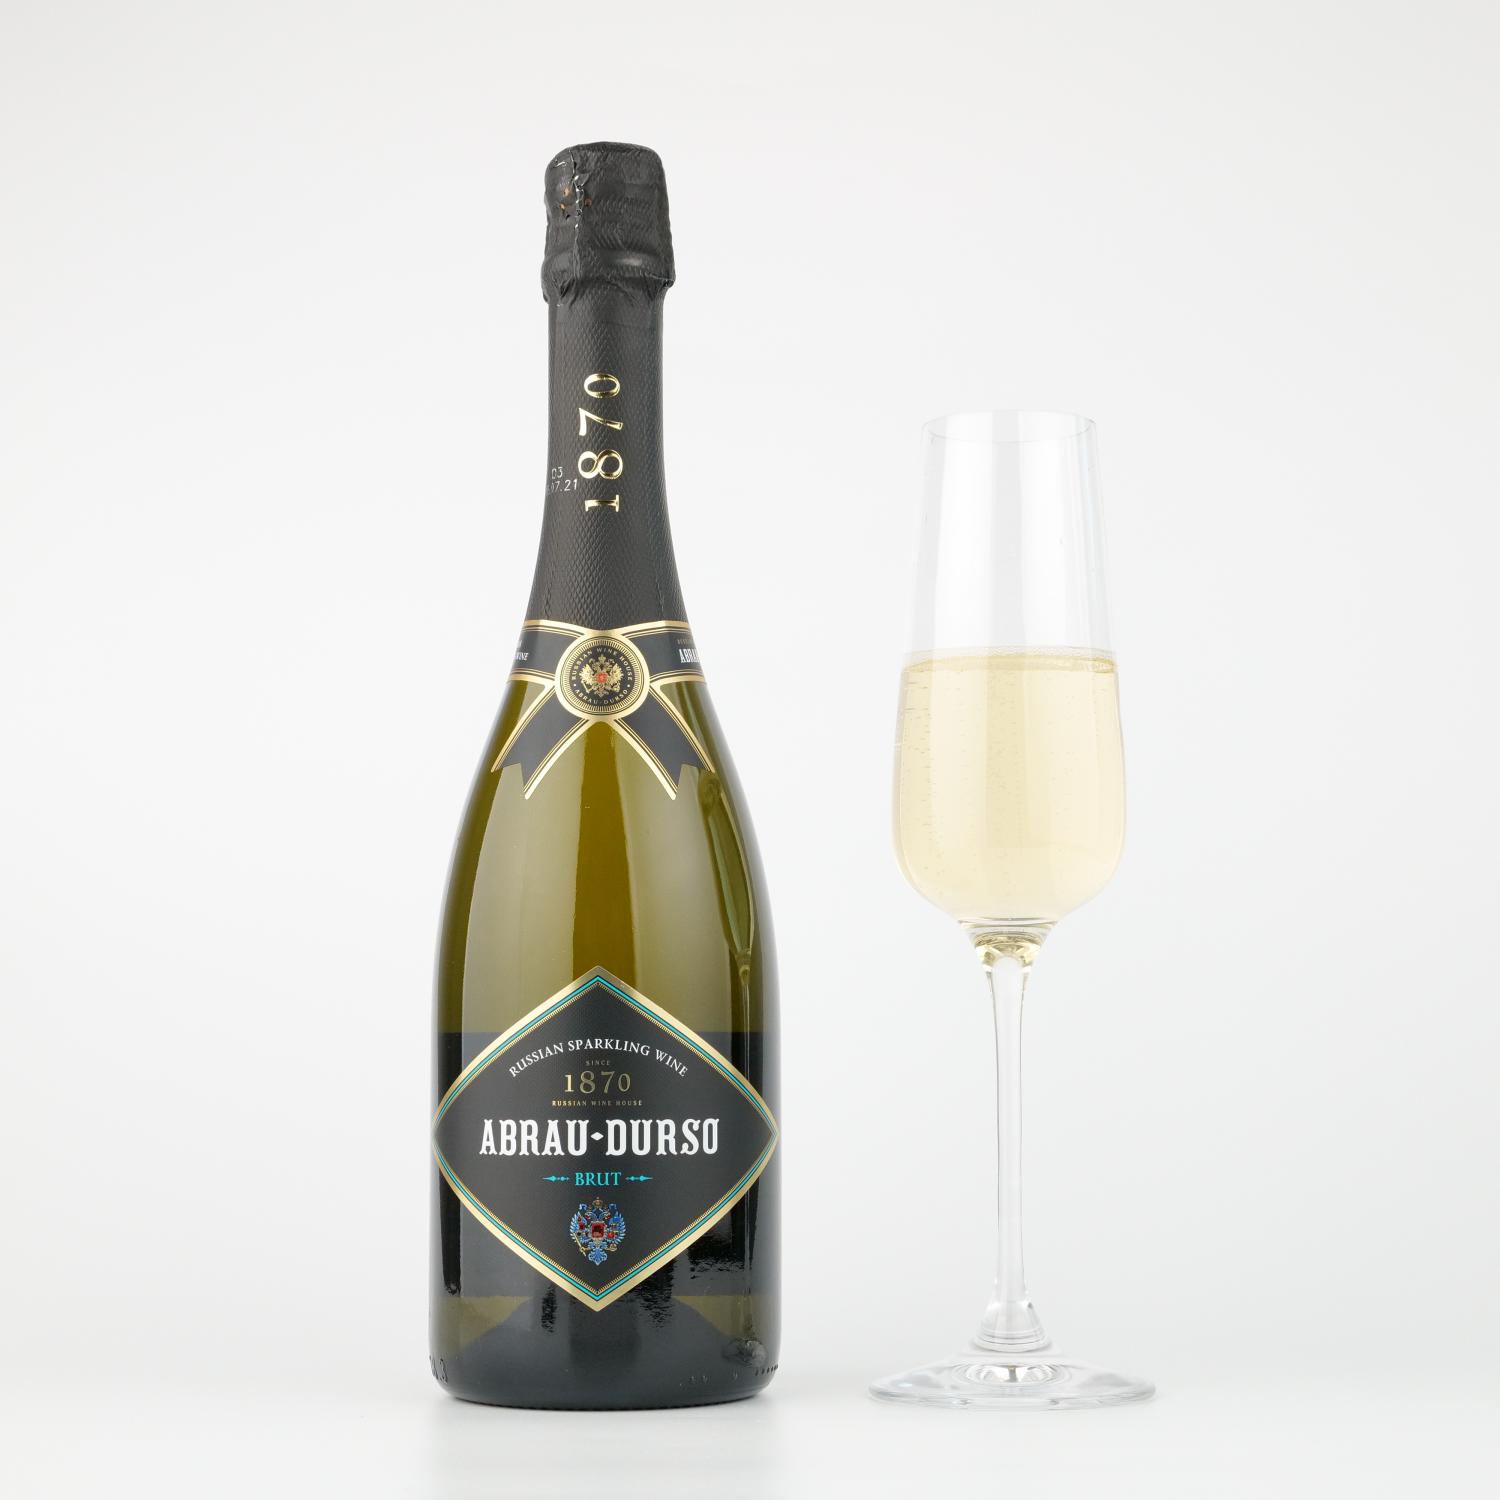 Sparkling wine white Abrau-durso